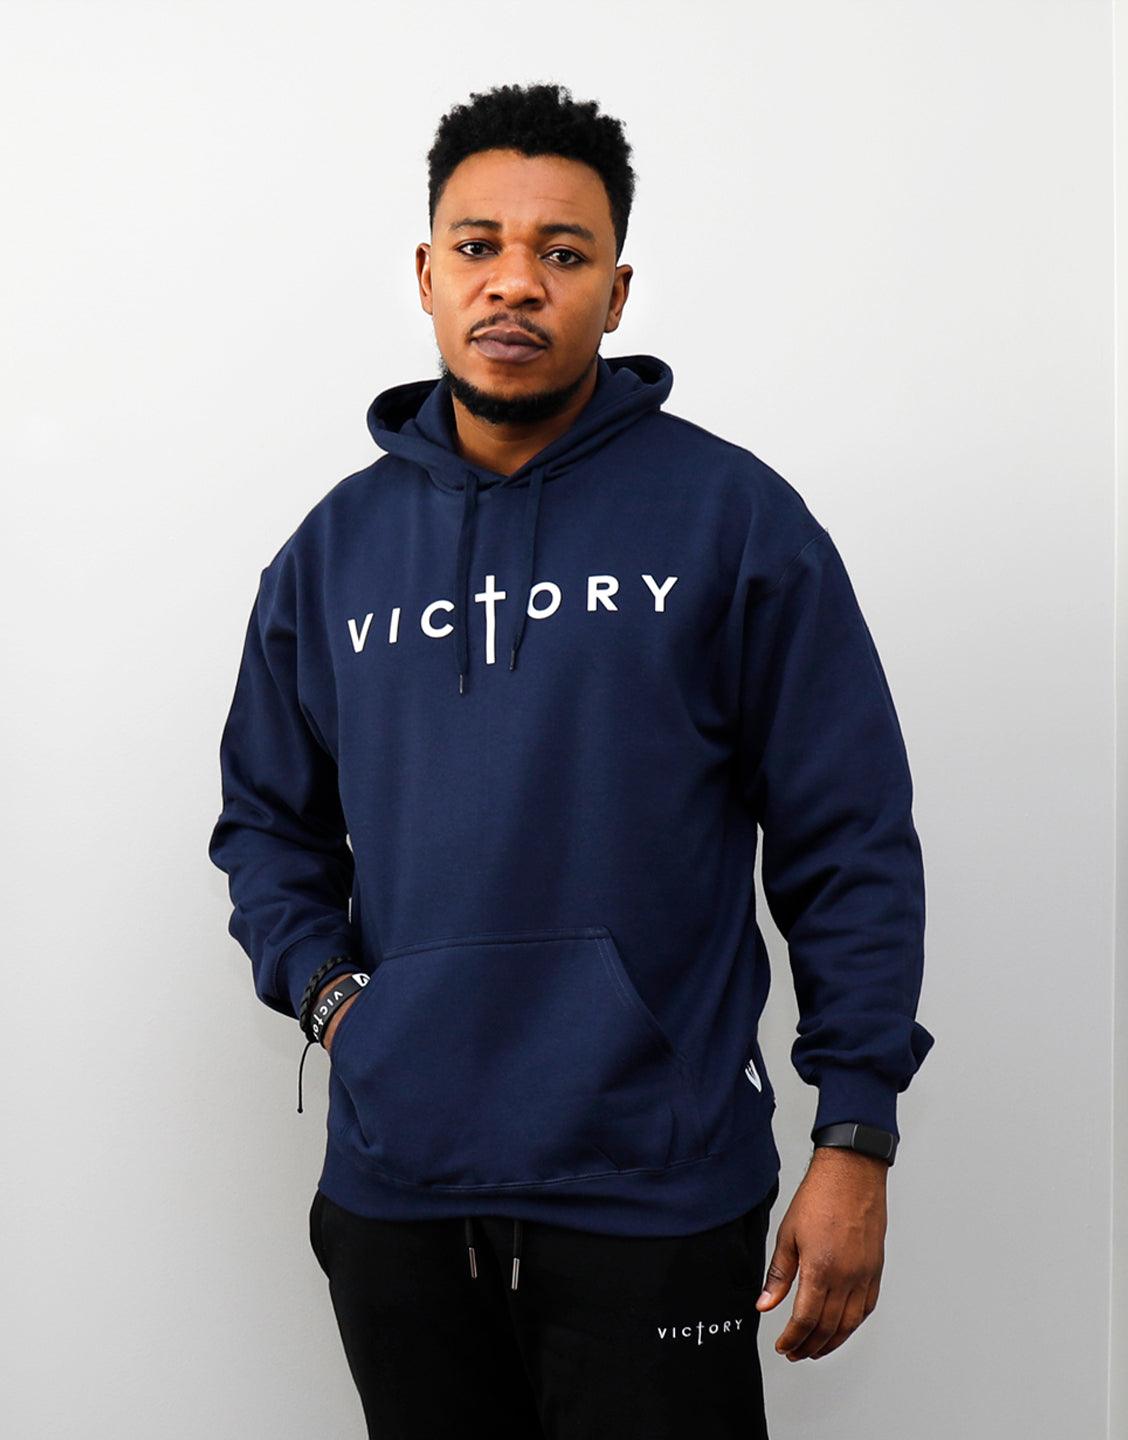 Victory Hoodie - Navy Blue - VOTC Clothing